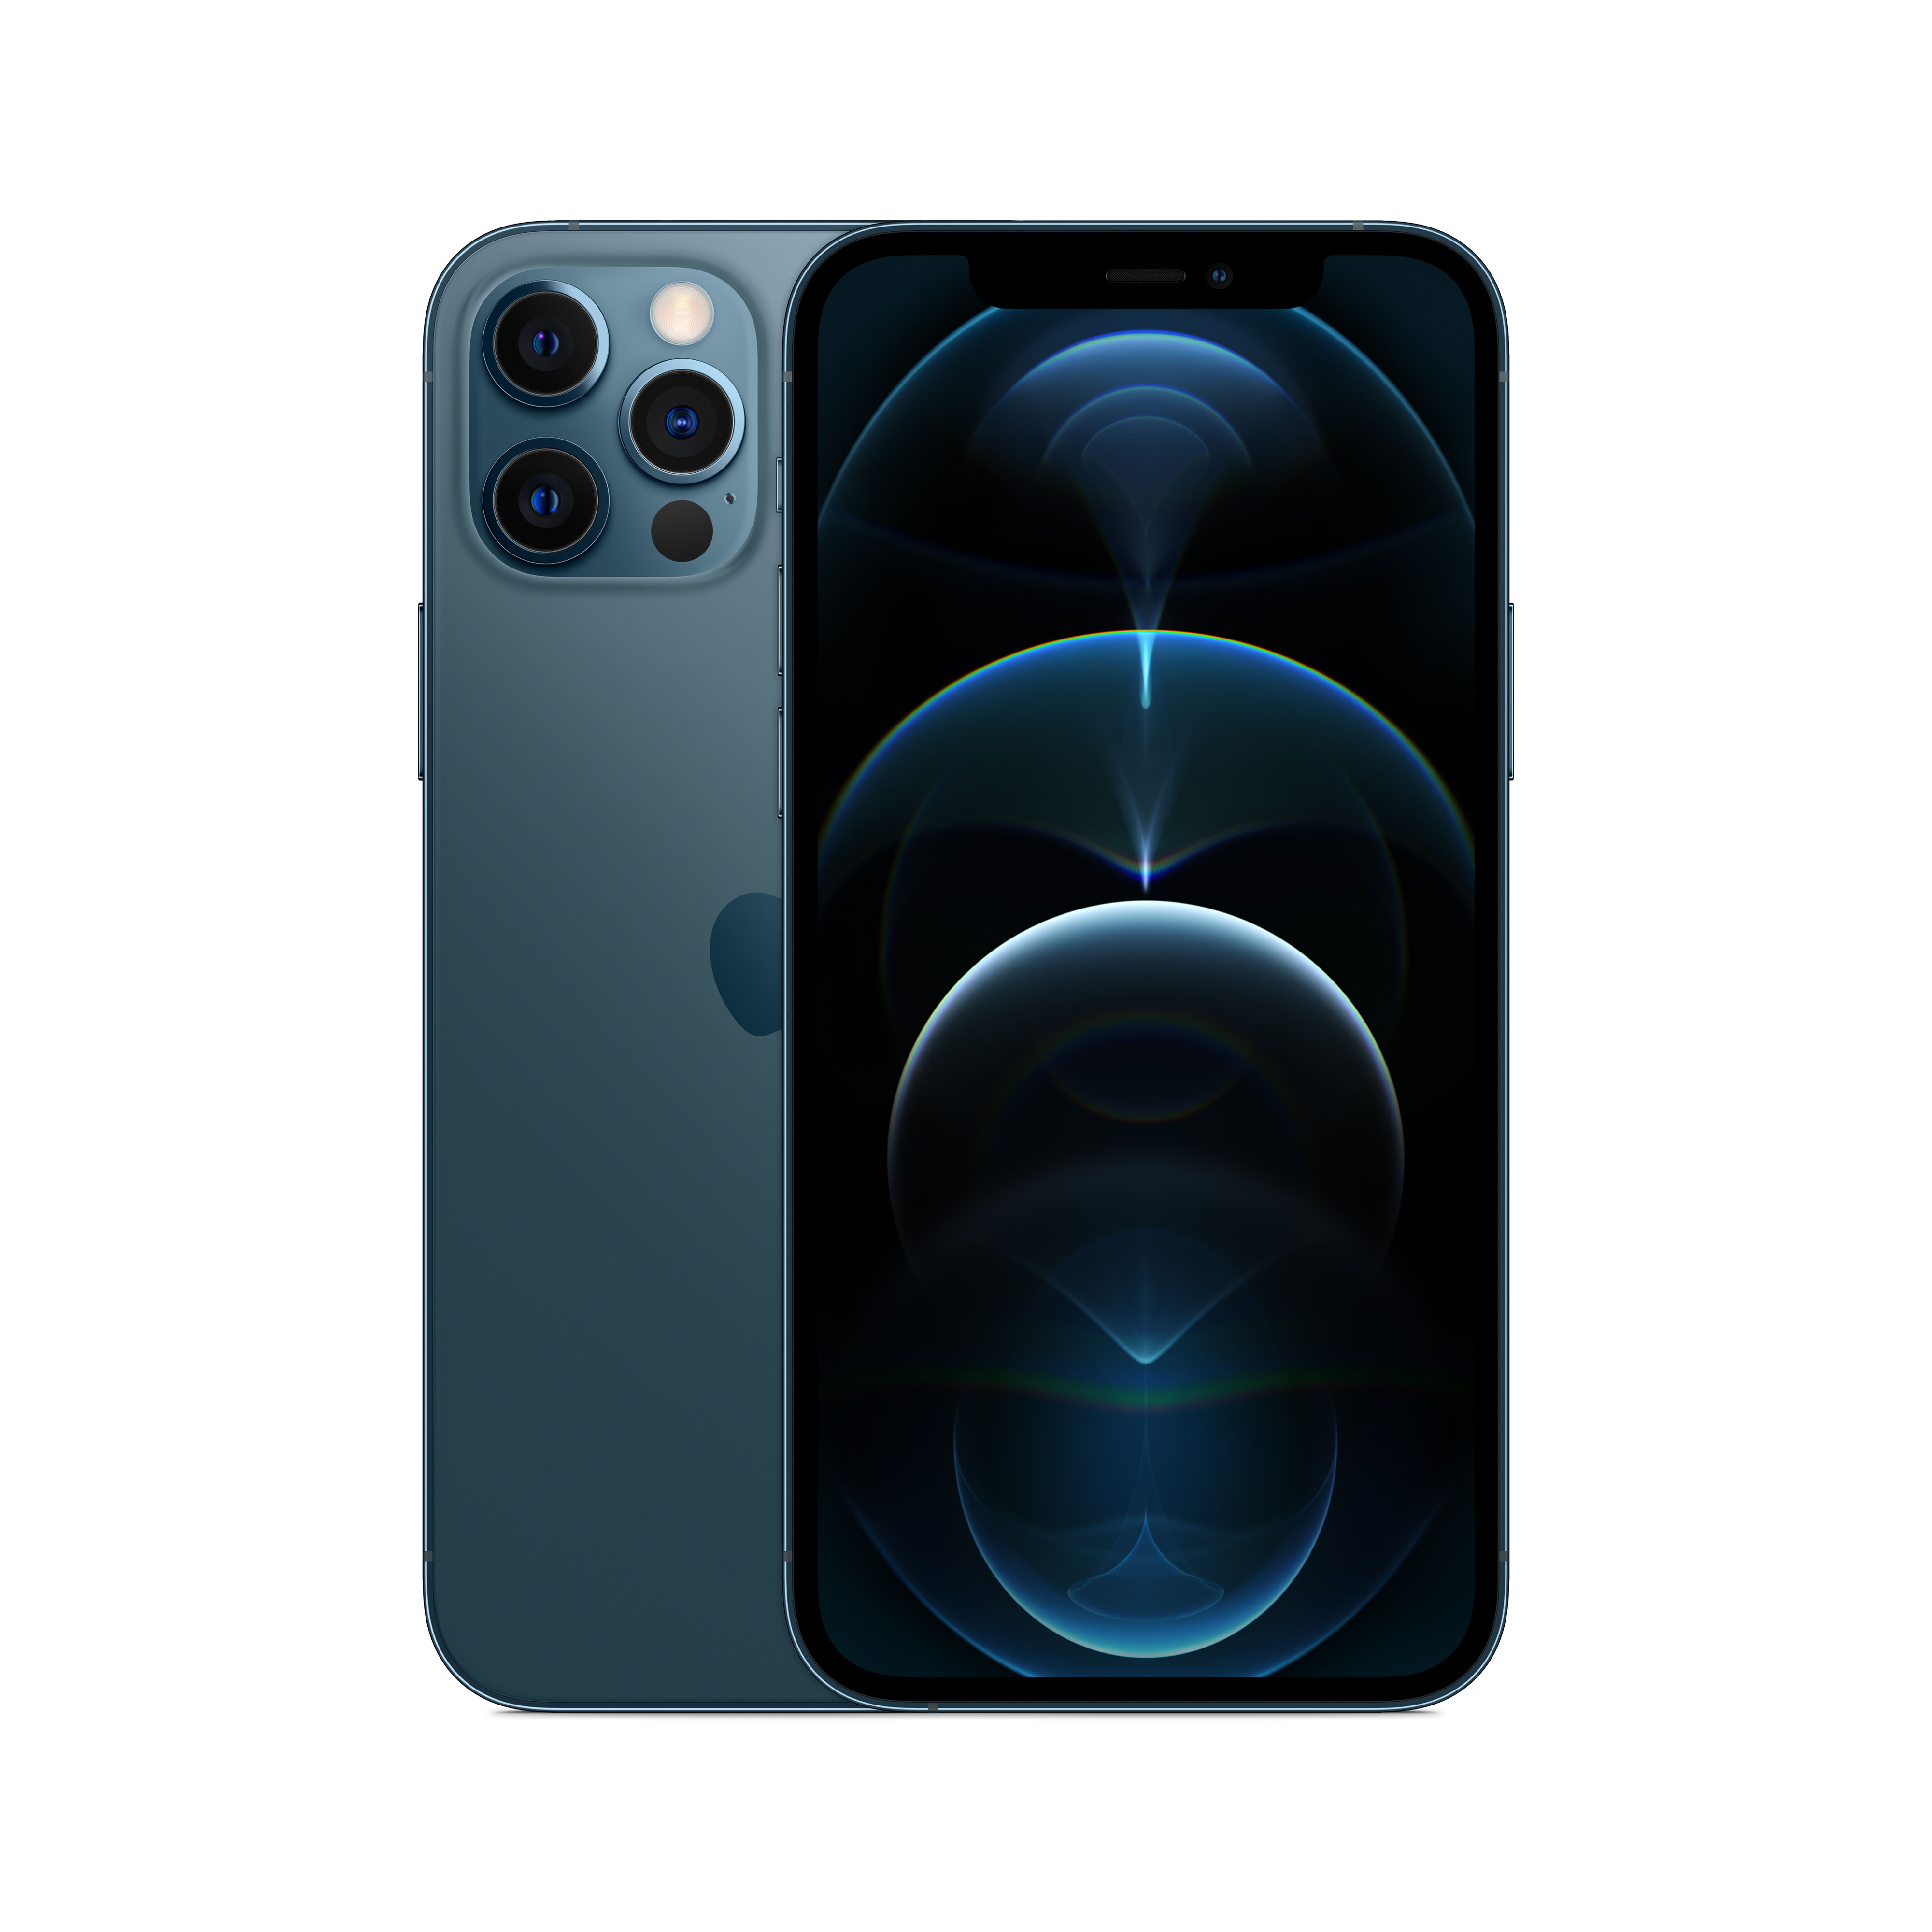 Verizon iPhone 12 Pro 128GB Pacific Blue - image 1 of 9